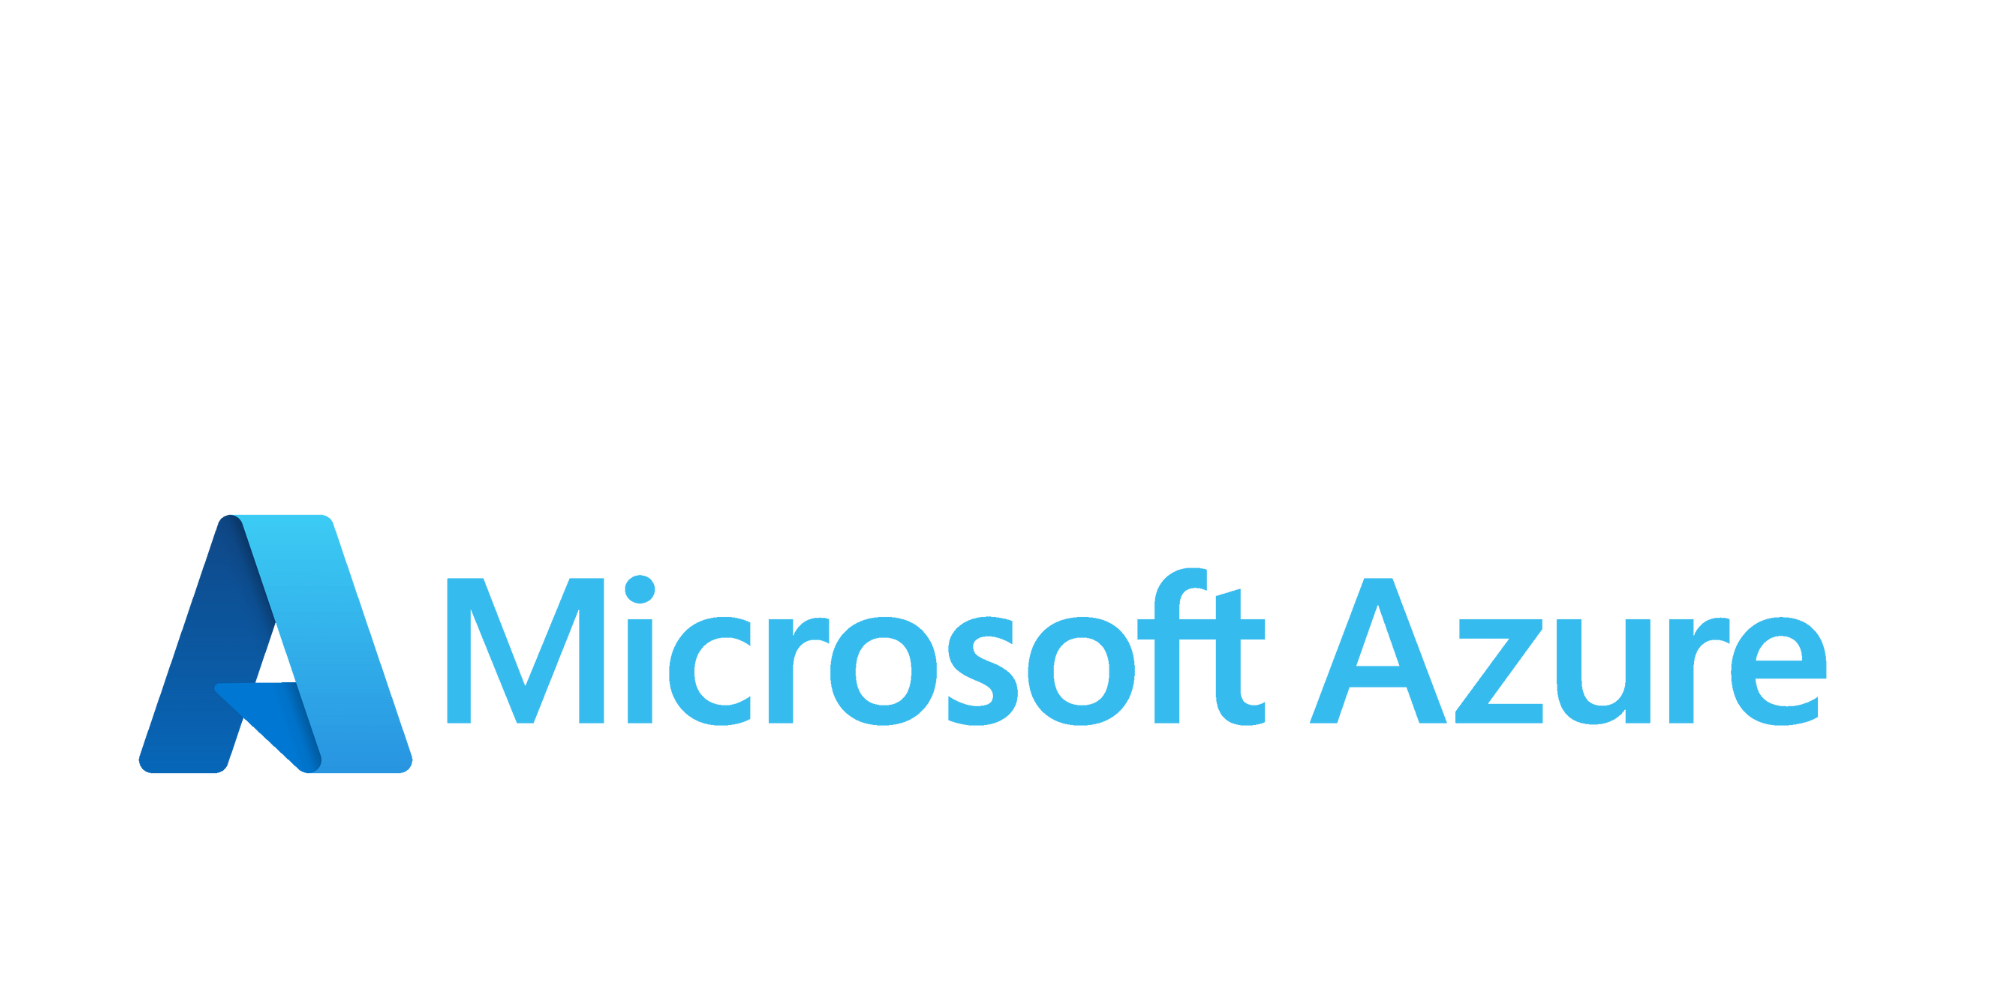 Microsoft Azure logotype